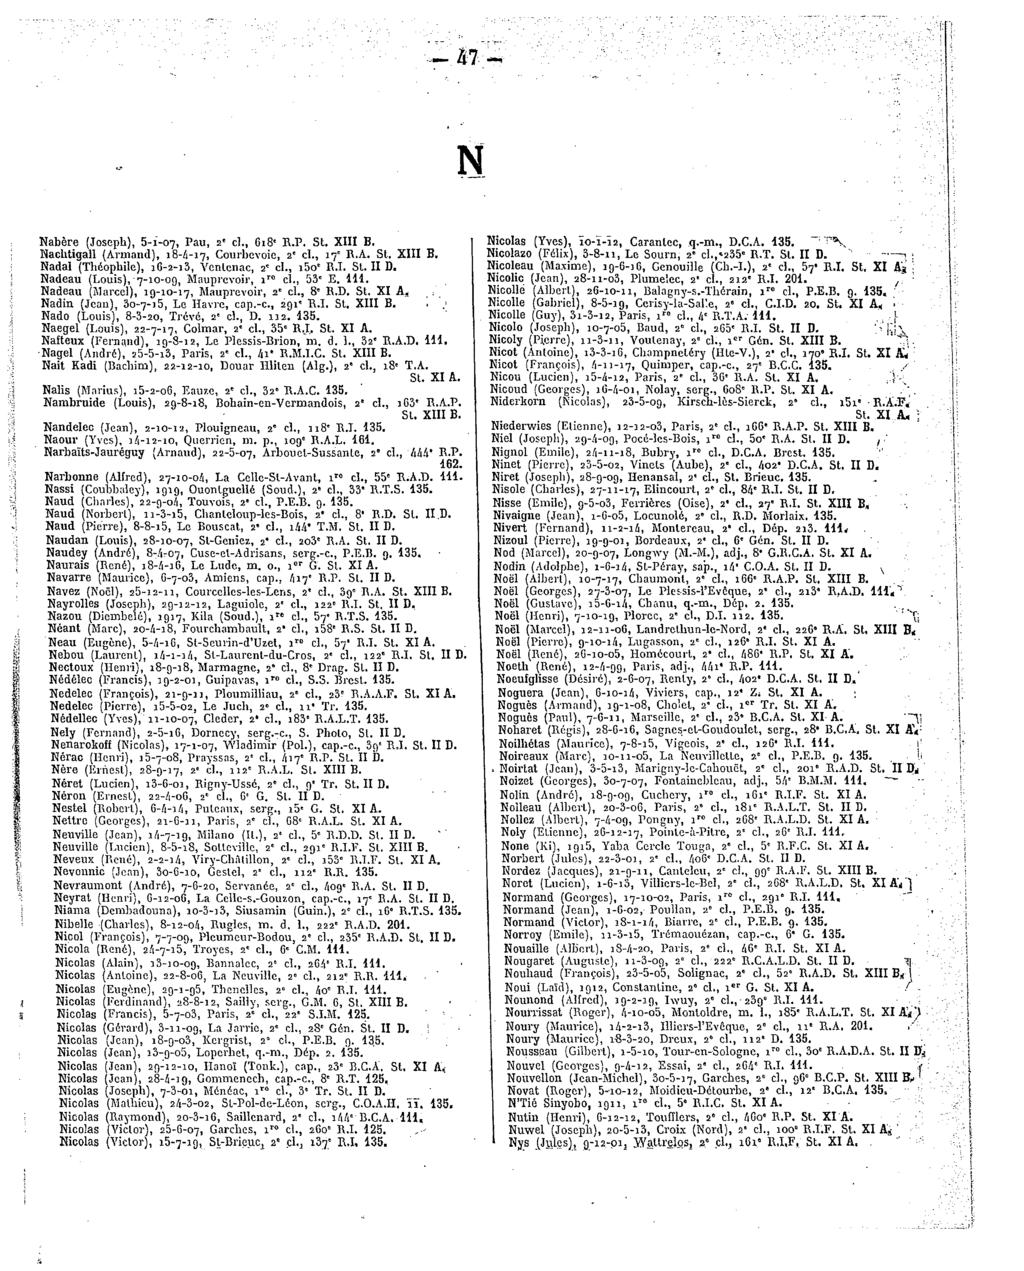 N -m- Nabère(Joseph), 5-1-07, Pau,2*cl.,618*R.P.St.XIIIB. Nachtigall (Armand), 18-4-17, Courbevoie, 2*ch,17 R.AṠt.XIIIB. Nadal(Théophile), 16-2-13, Ventcnac, 3'cl.,i5o*R.LSt.IID.